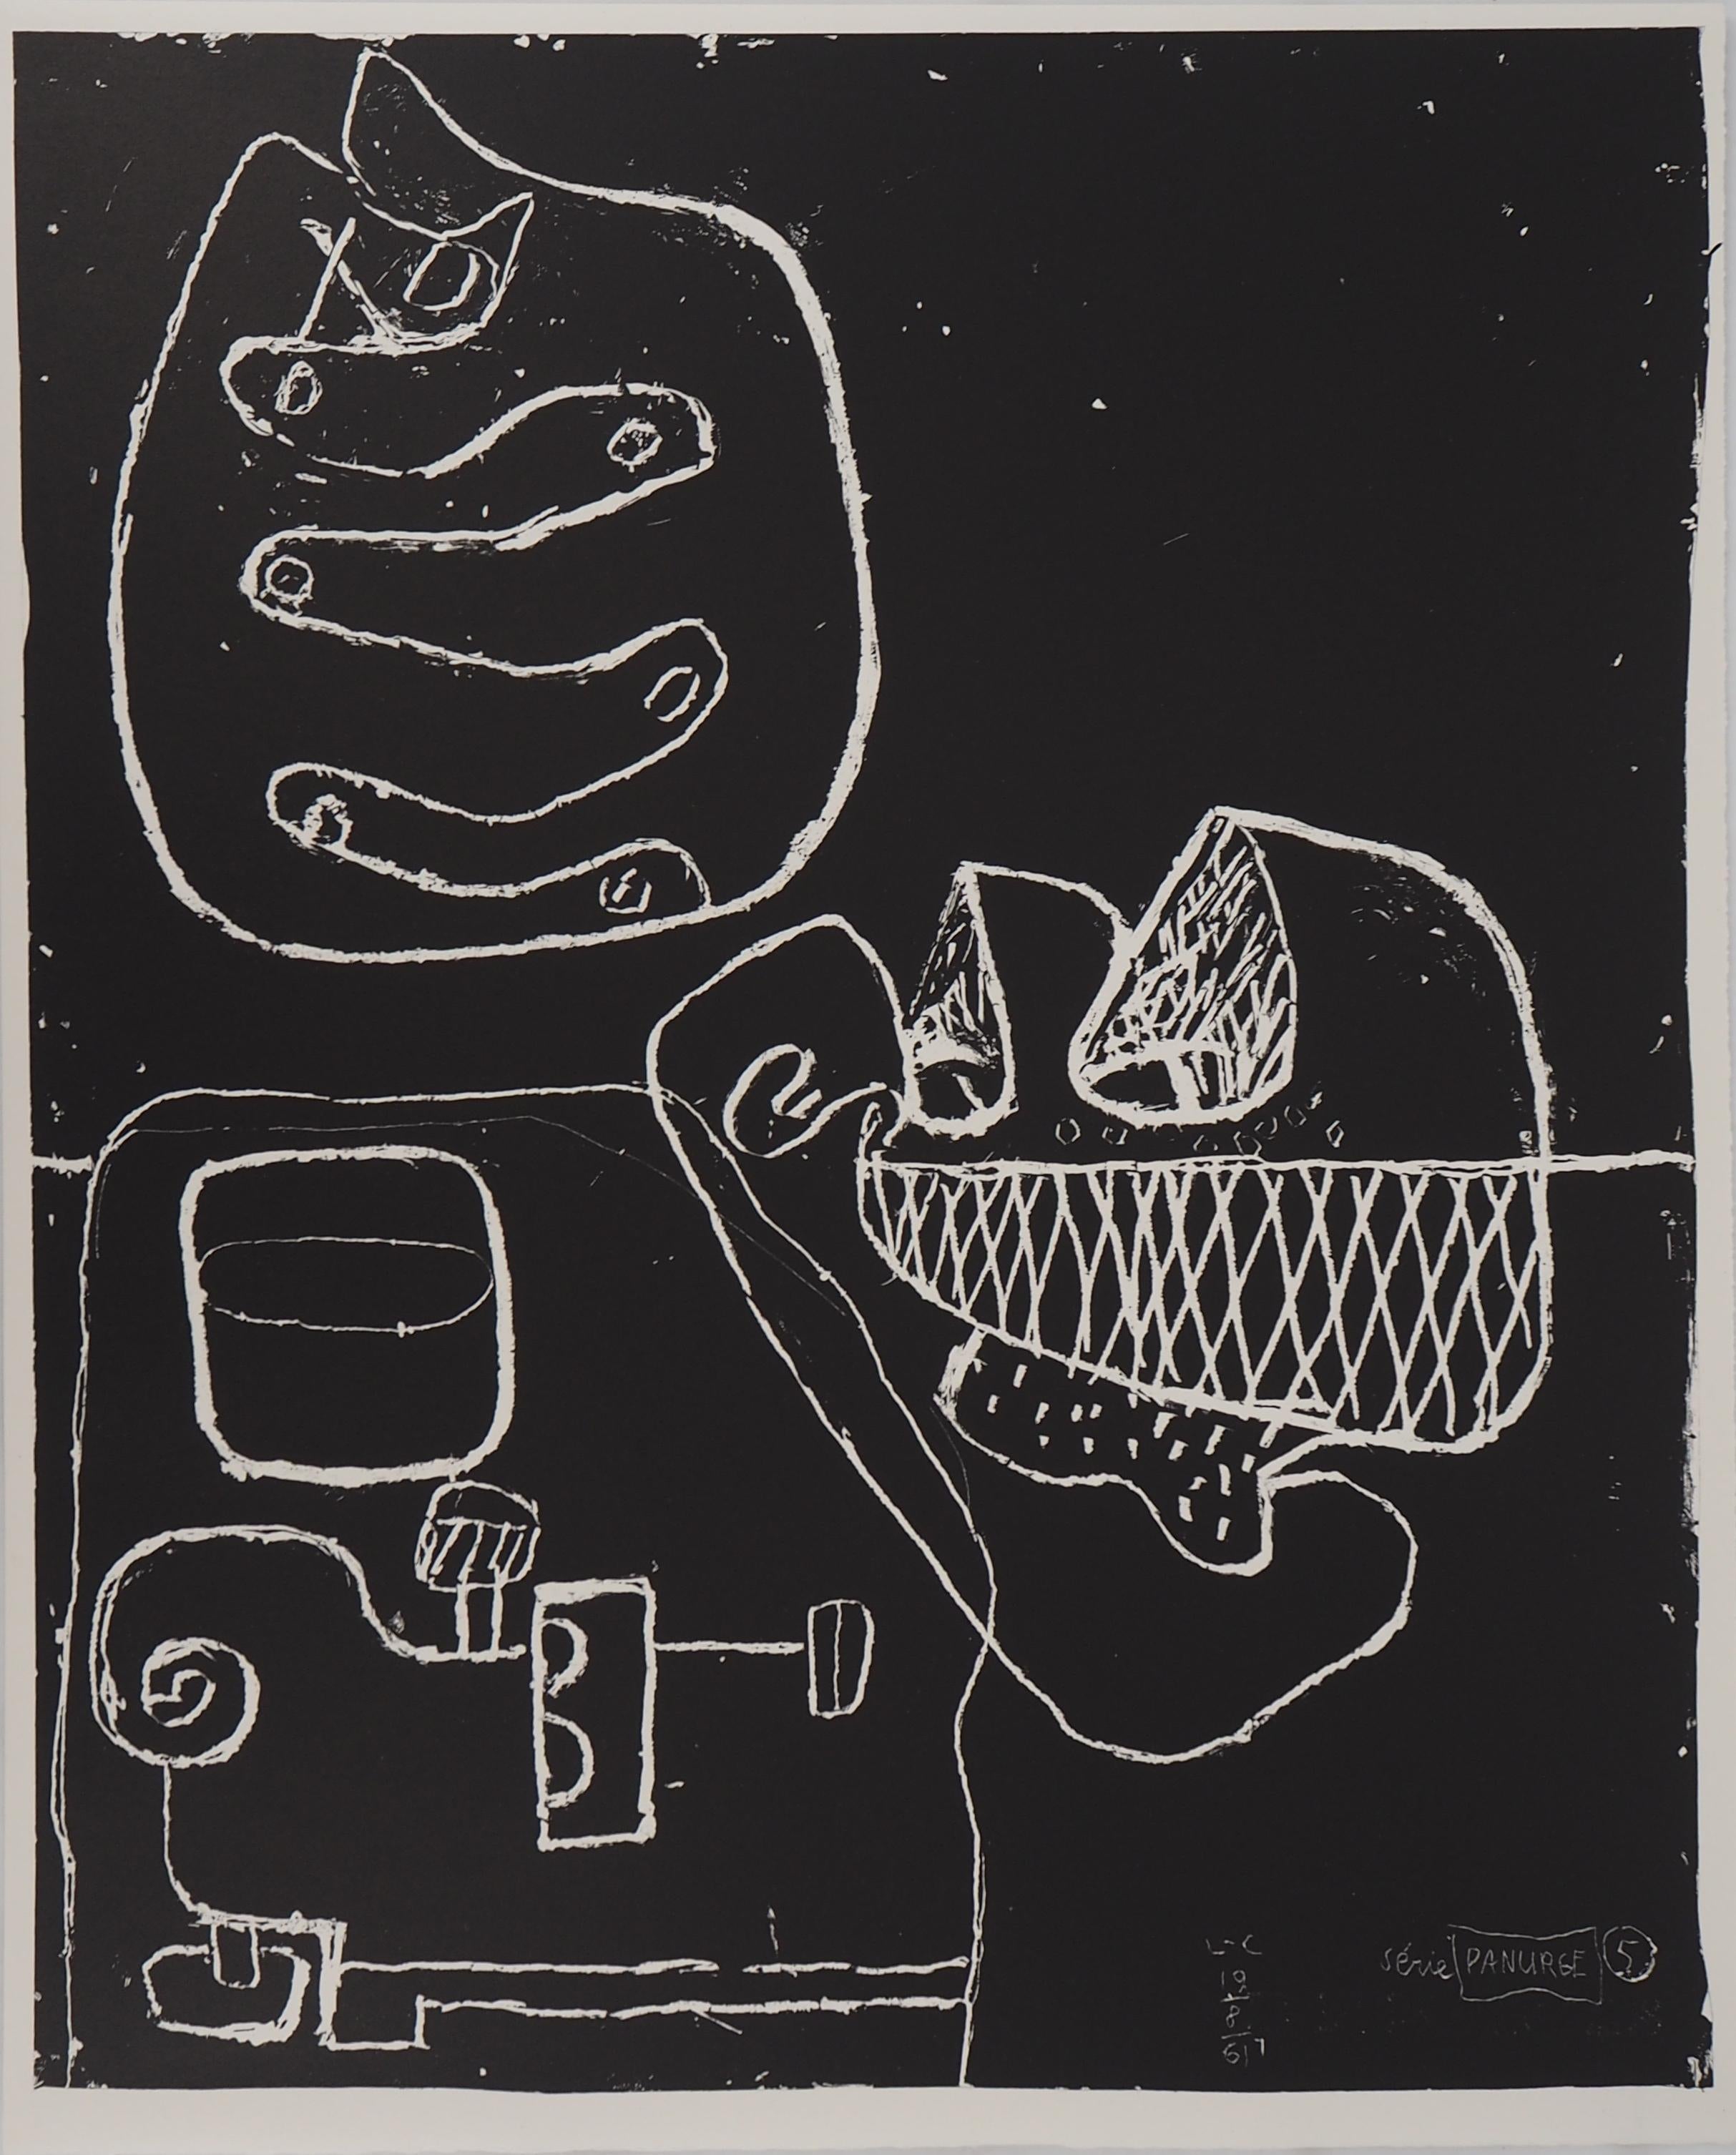 Le Corbusier Figurative Print - Hands and Sea Shell - Original Lithograph (Mourlot)